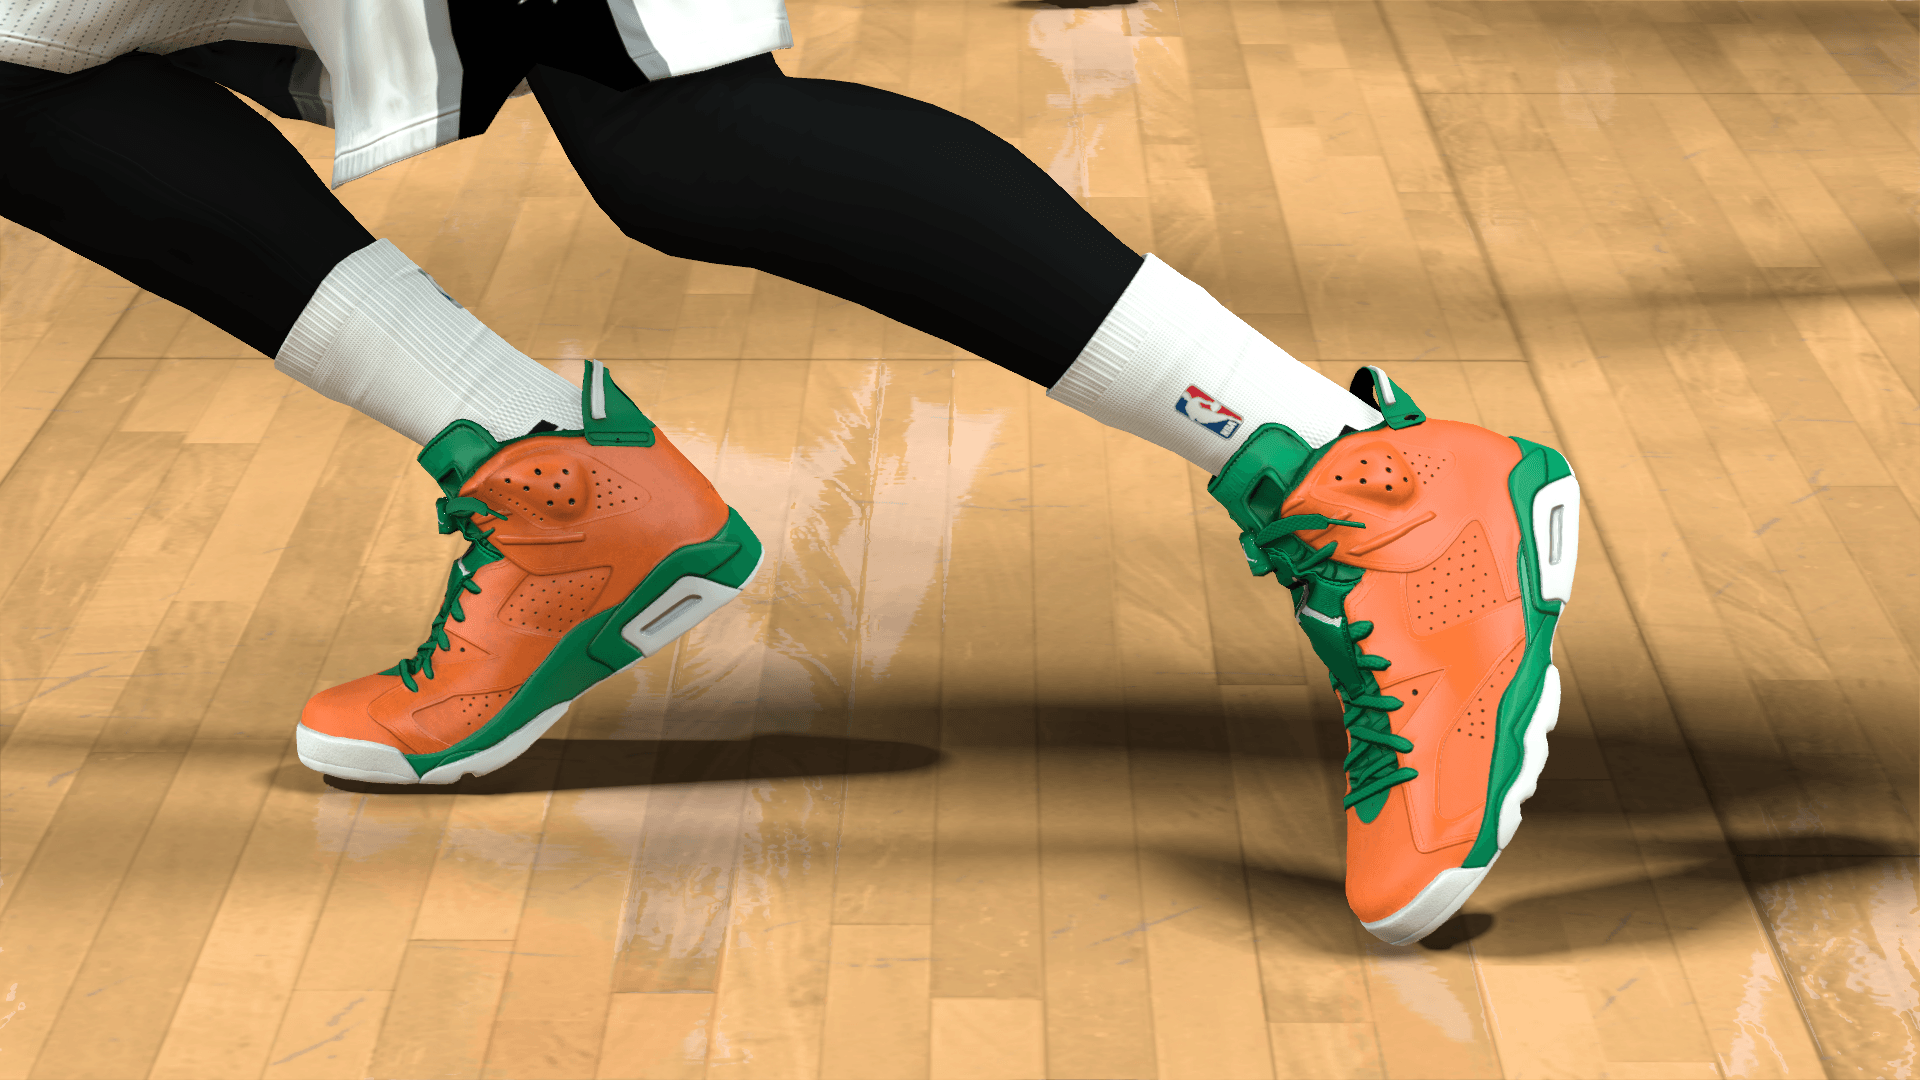 NBA 2K17 Kicks: The Many Ways The Air Jordan 6 Gatorade Could Go